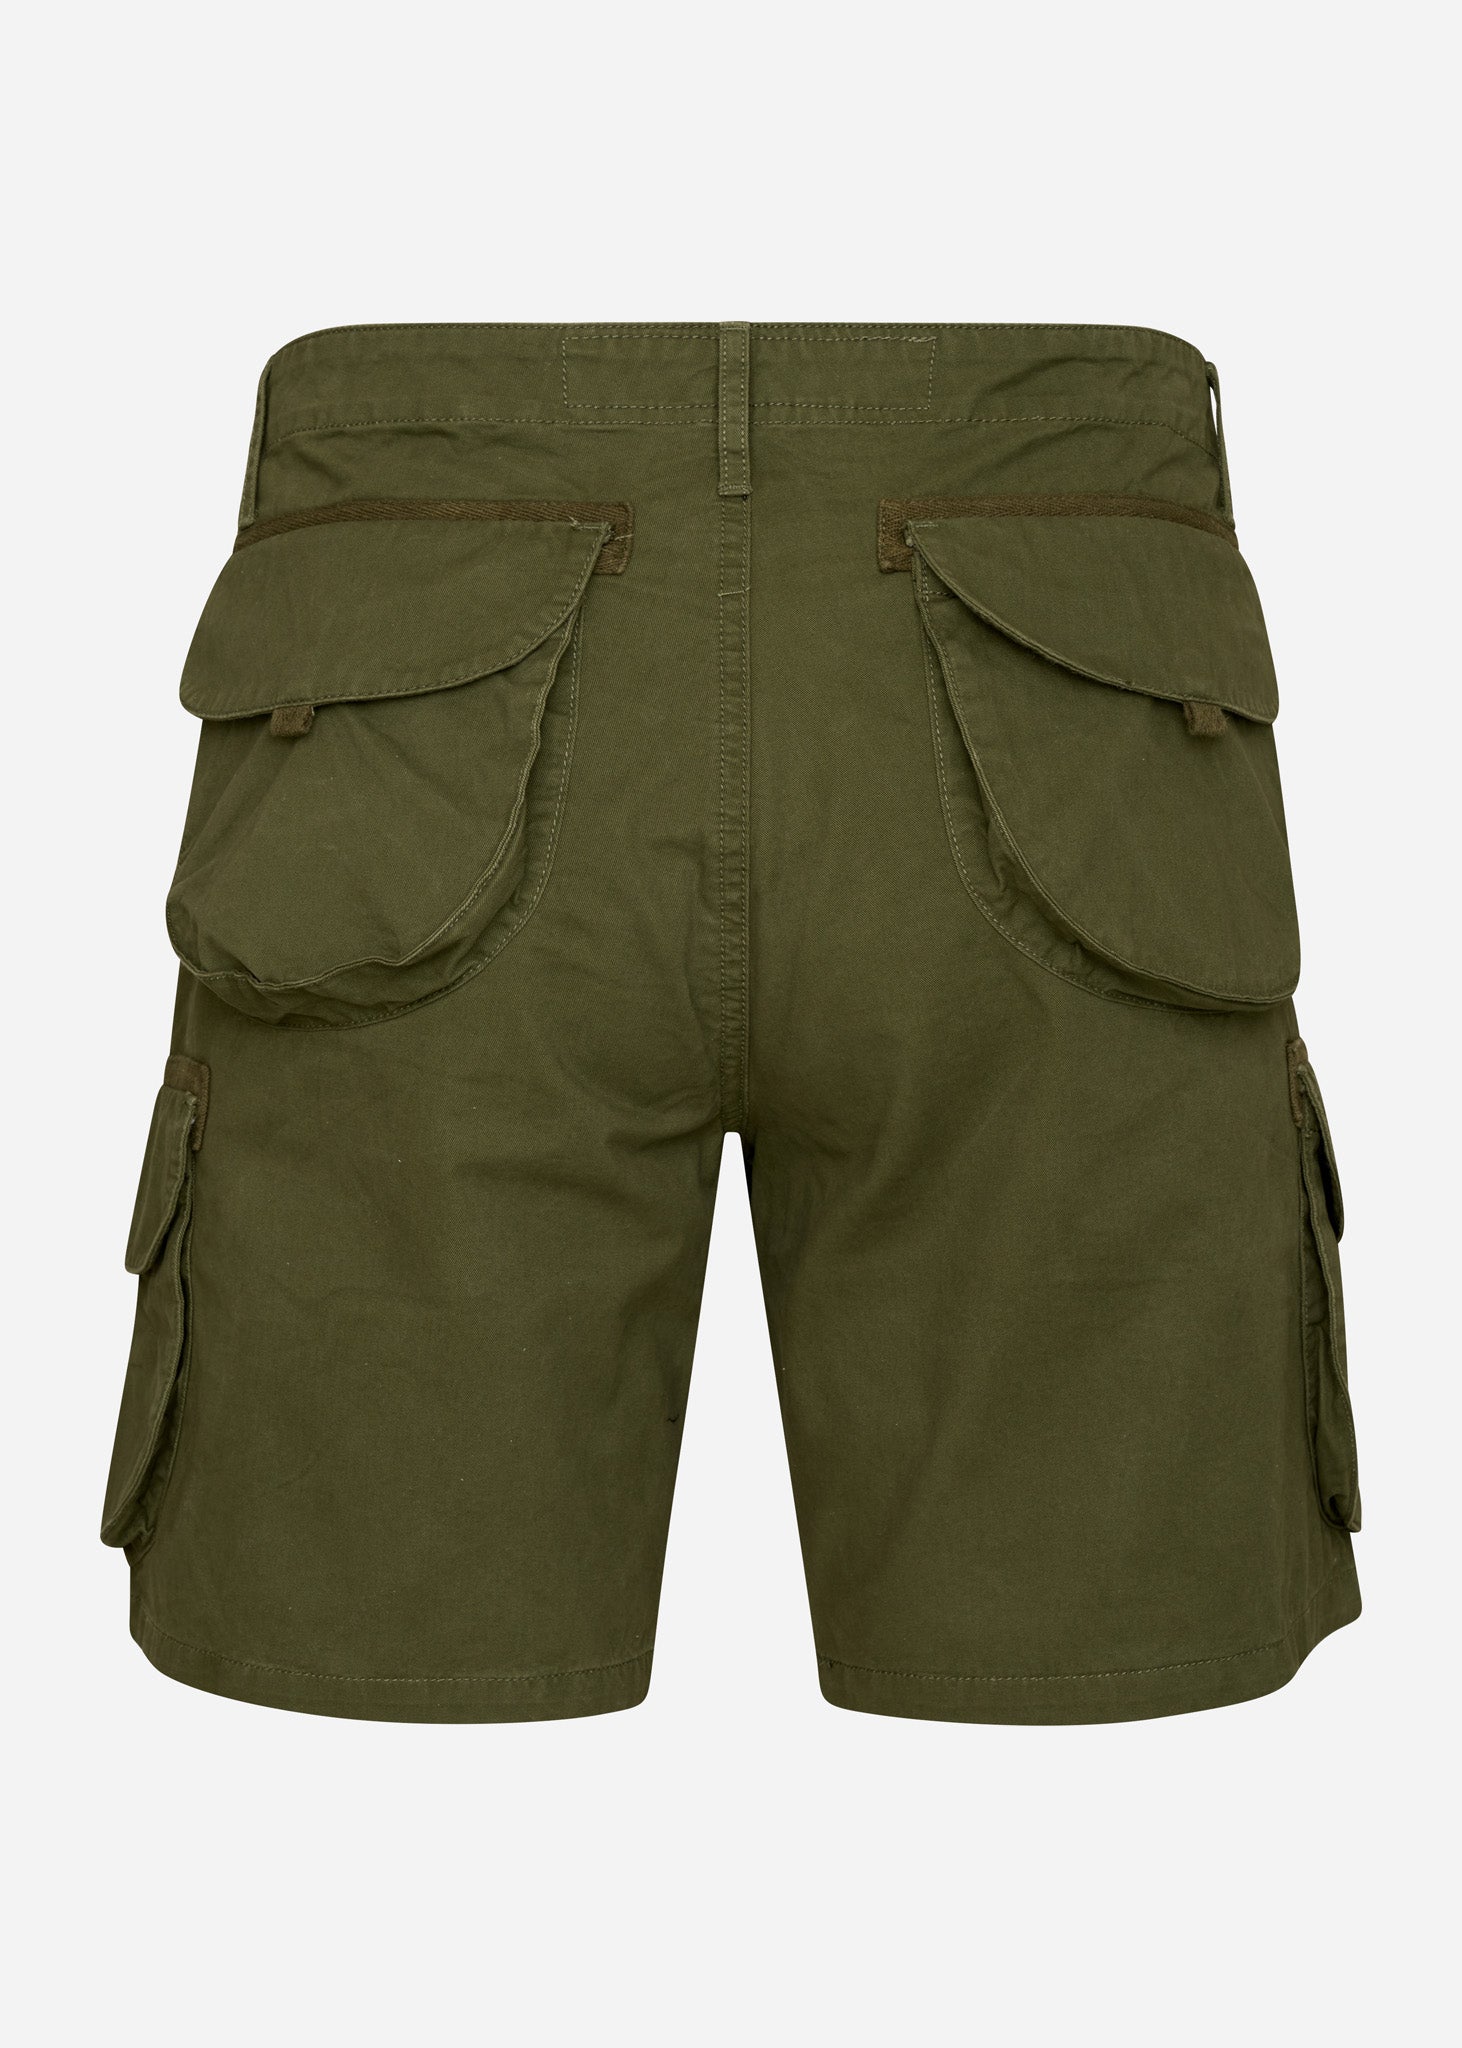 Bunker shorts - khaki - Peaceful Hooligan